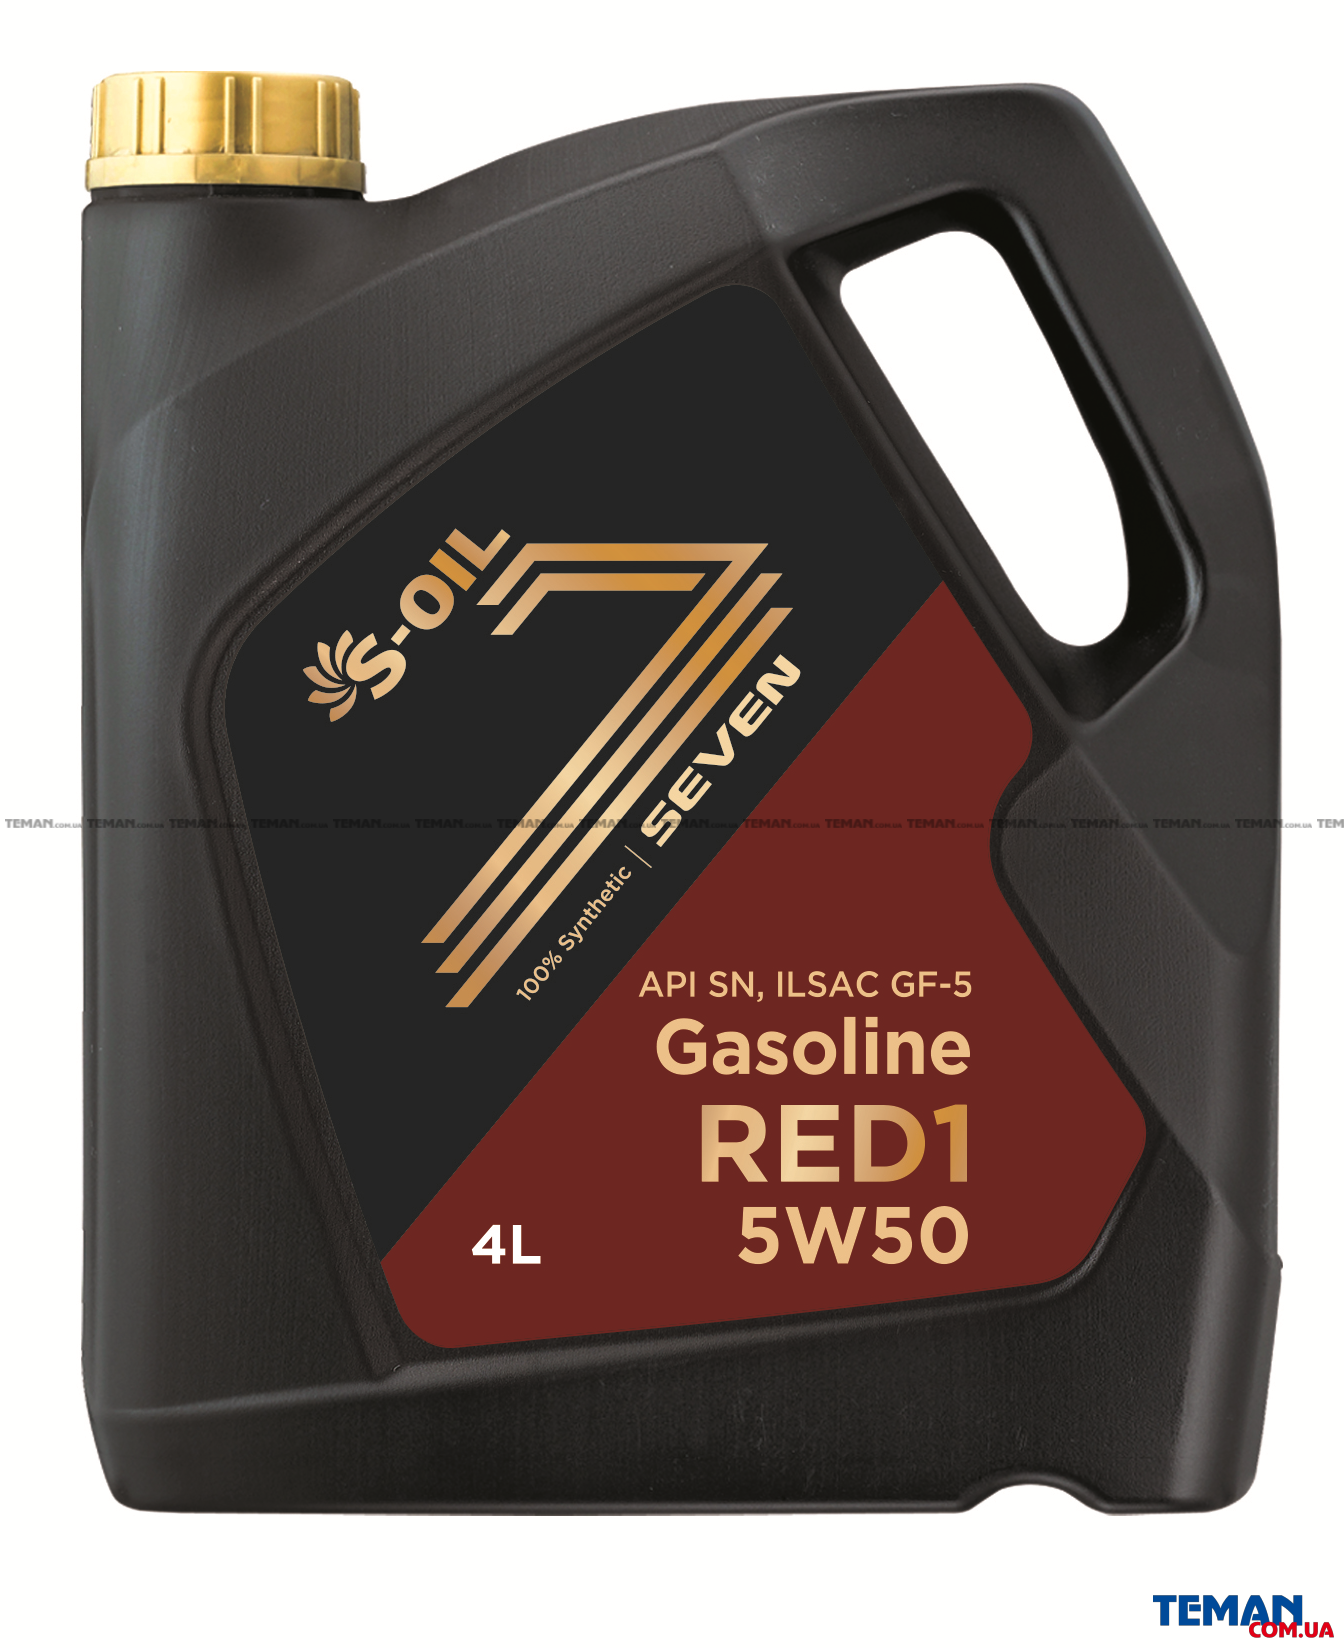  Купить Синтетическое моторное масло S-OIL SEVEN RED1 5W-50, 4лS-OIL sevenred15w504   